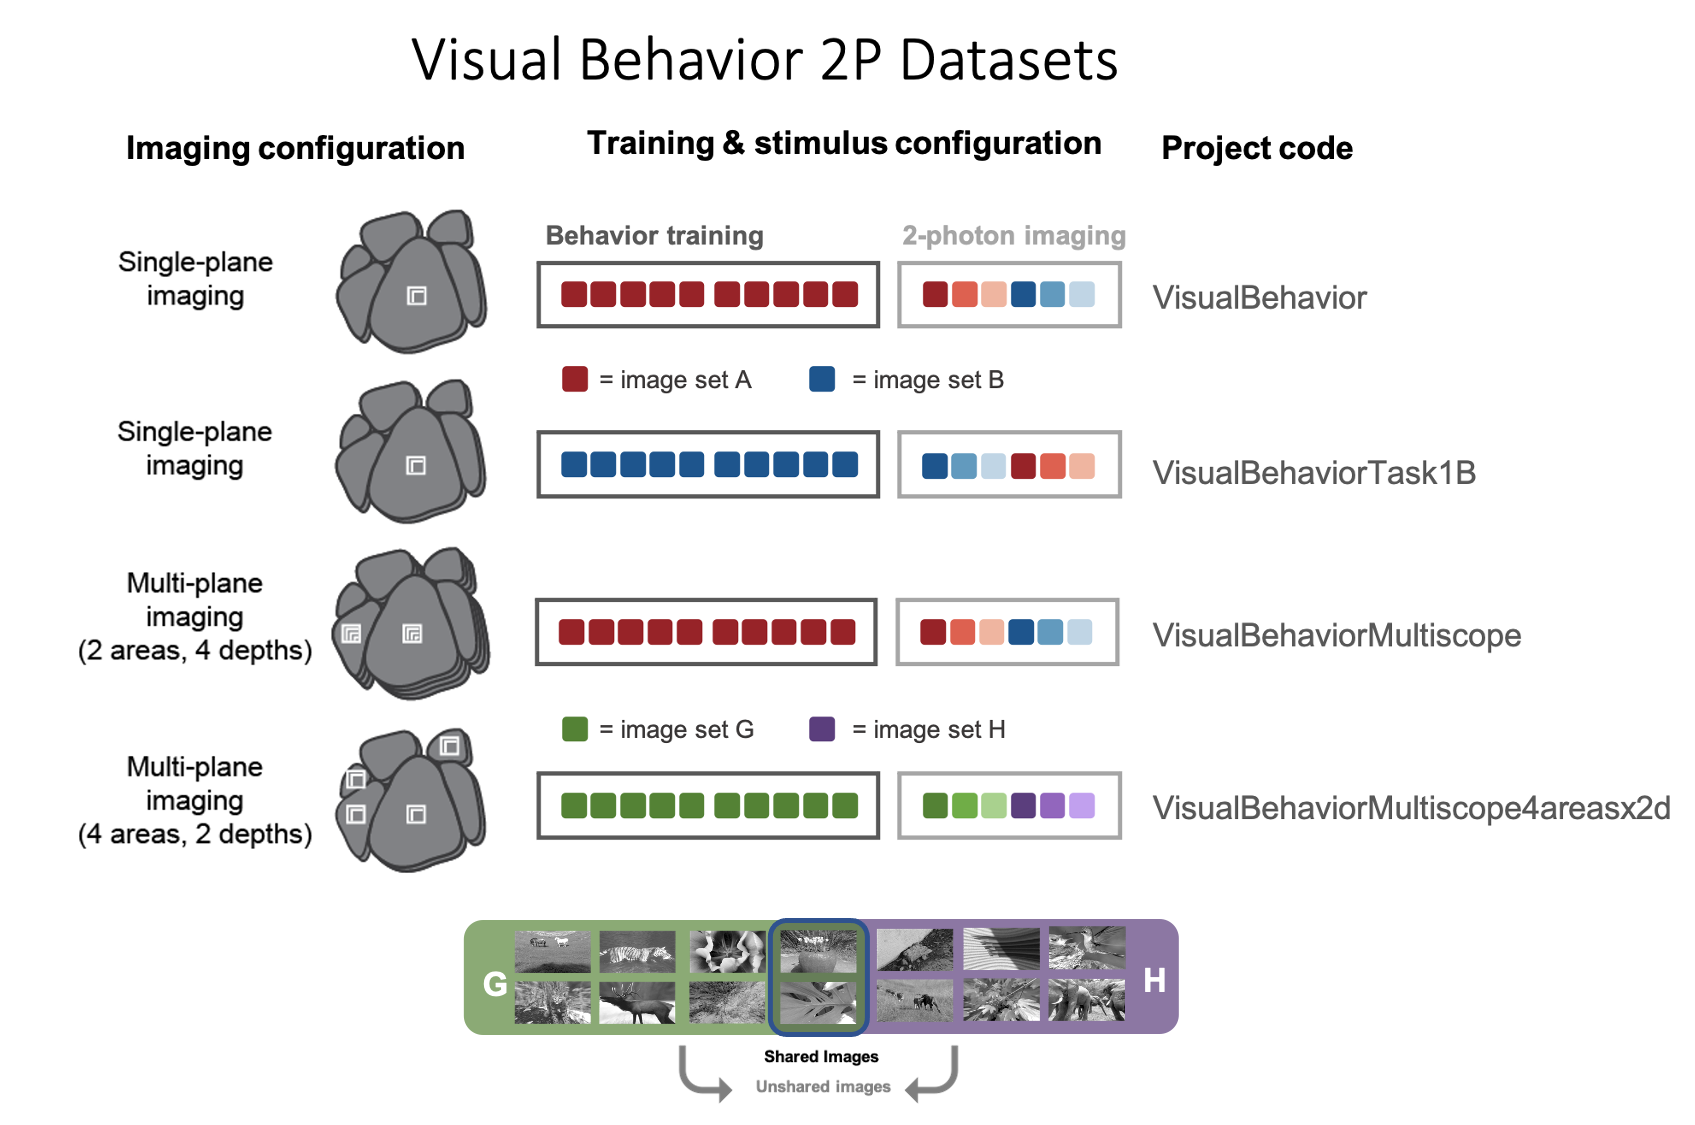 _static/visual_behavior_2p/dataset_variants_GH.png